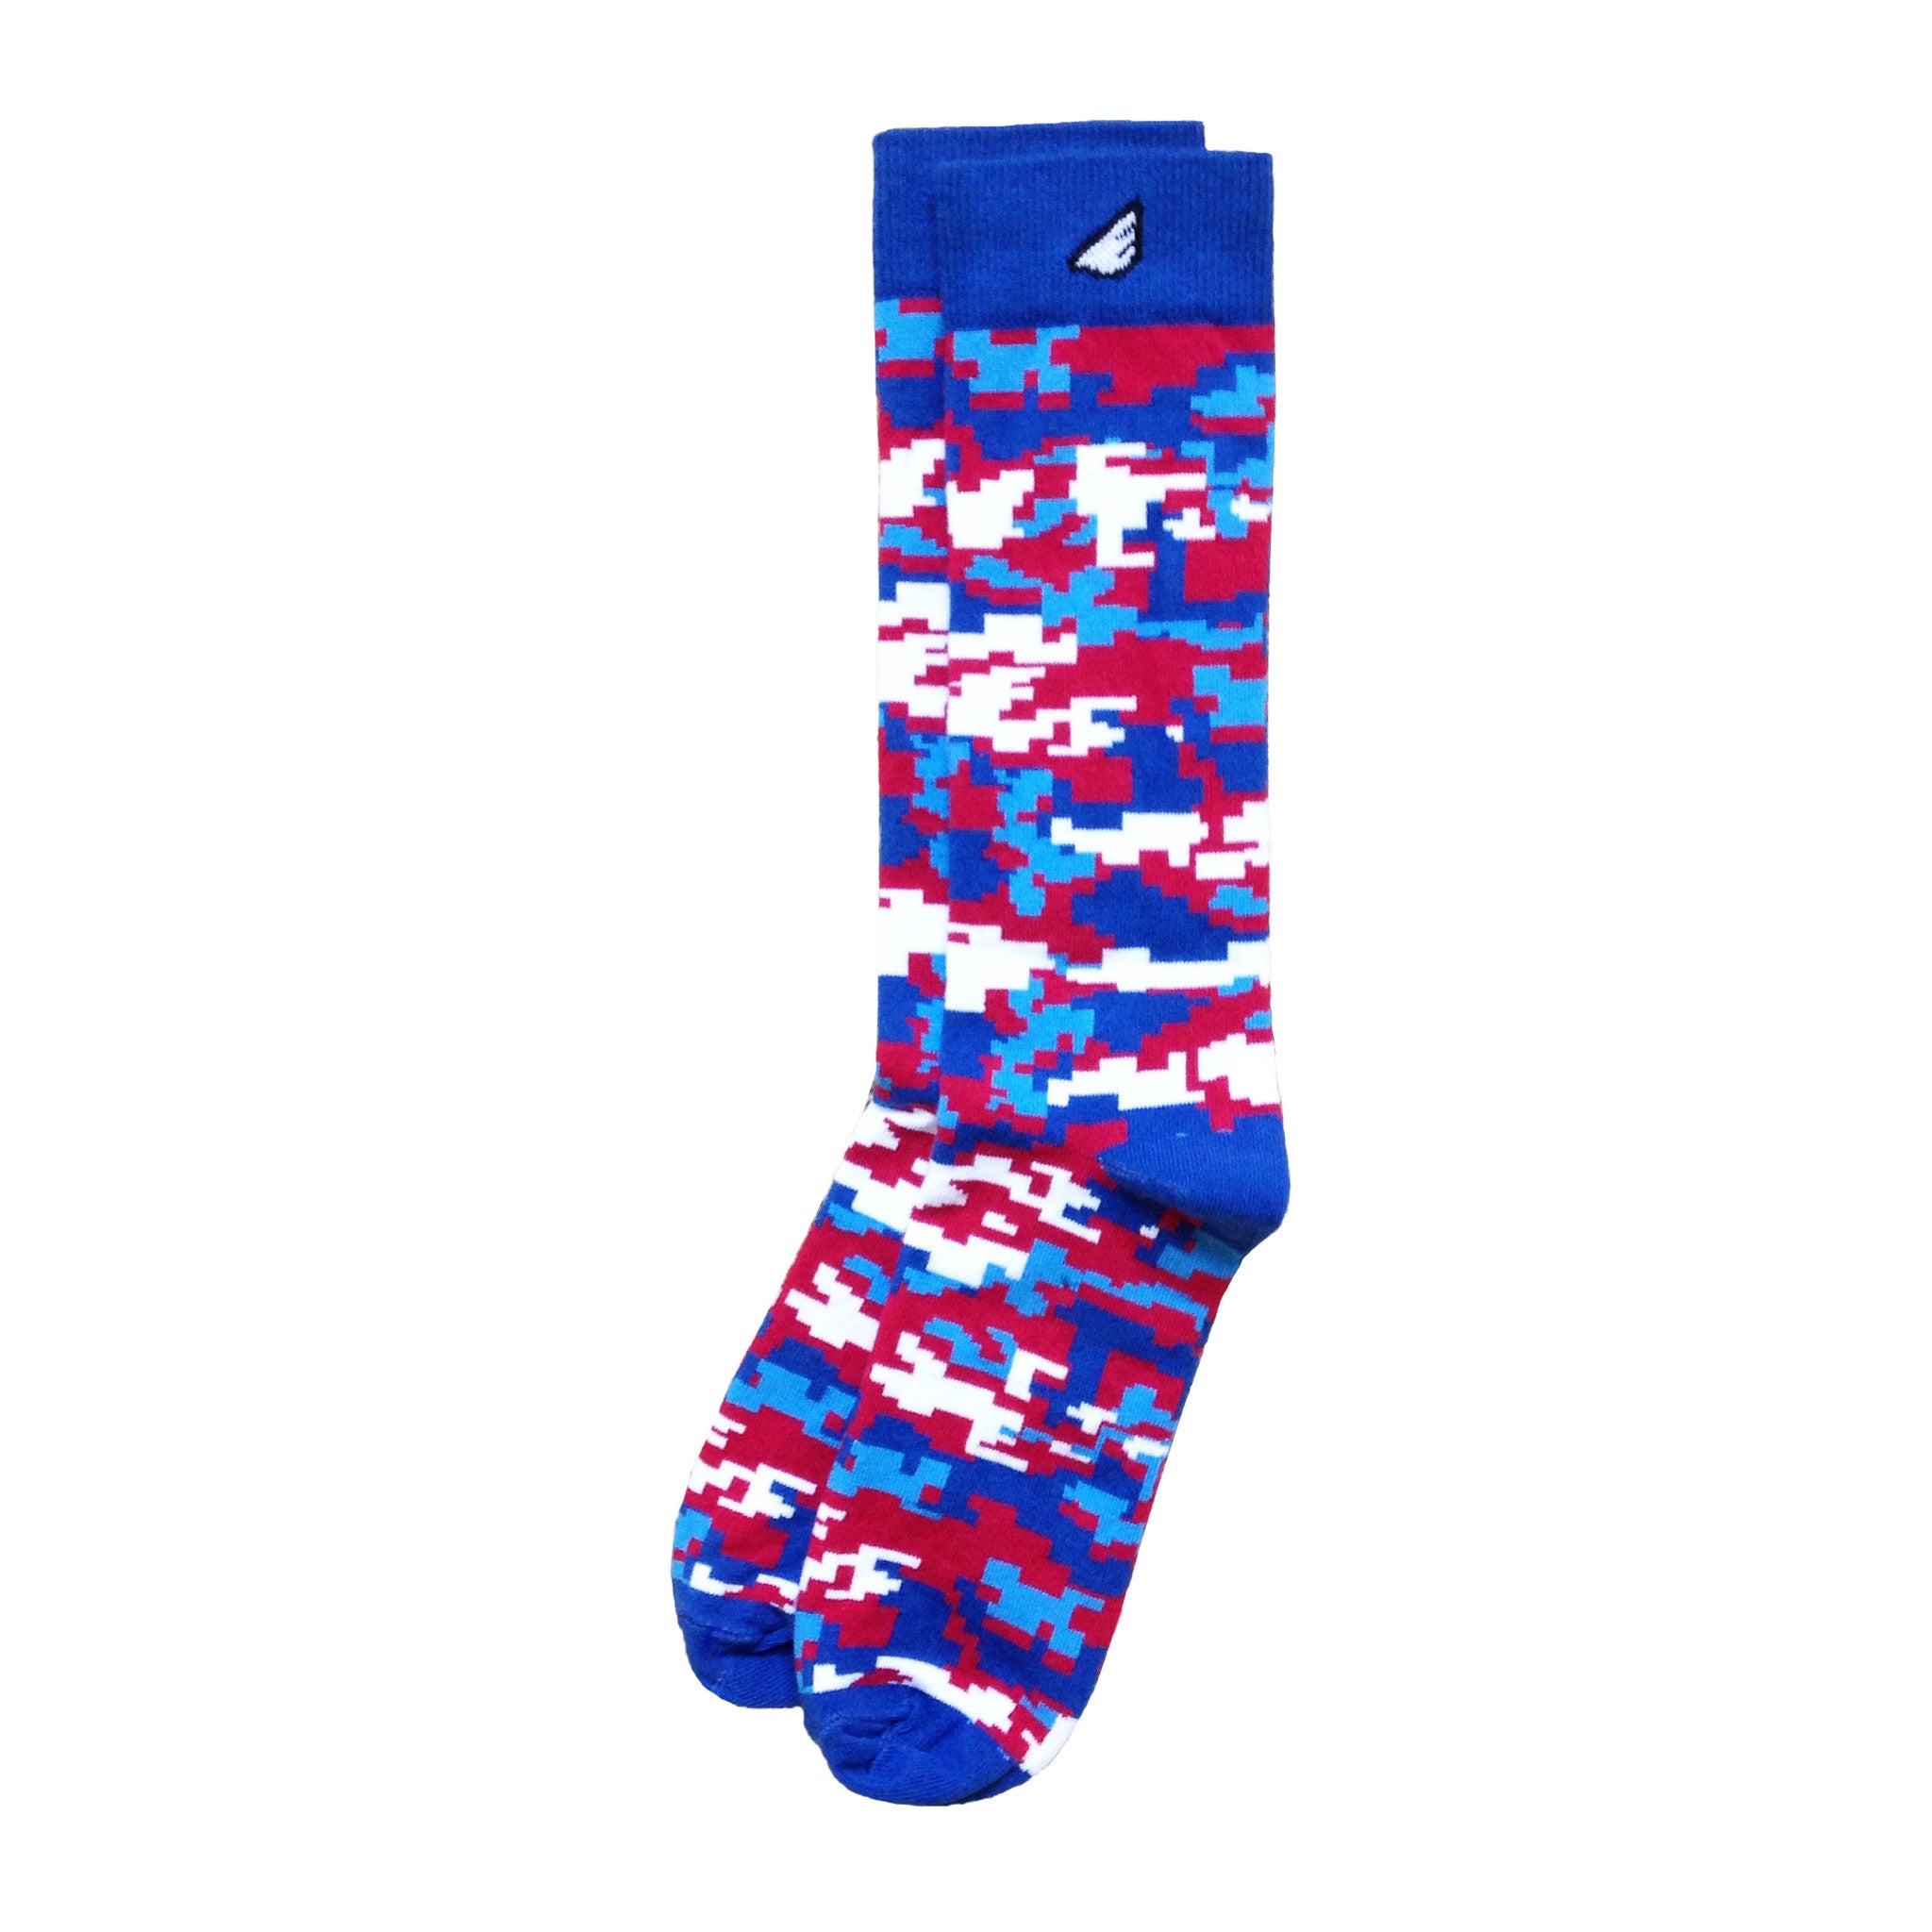 Blue Army Camouflage Knee Socks